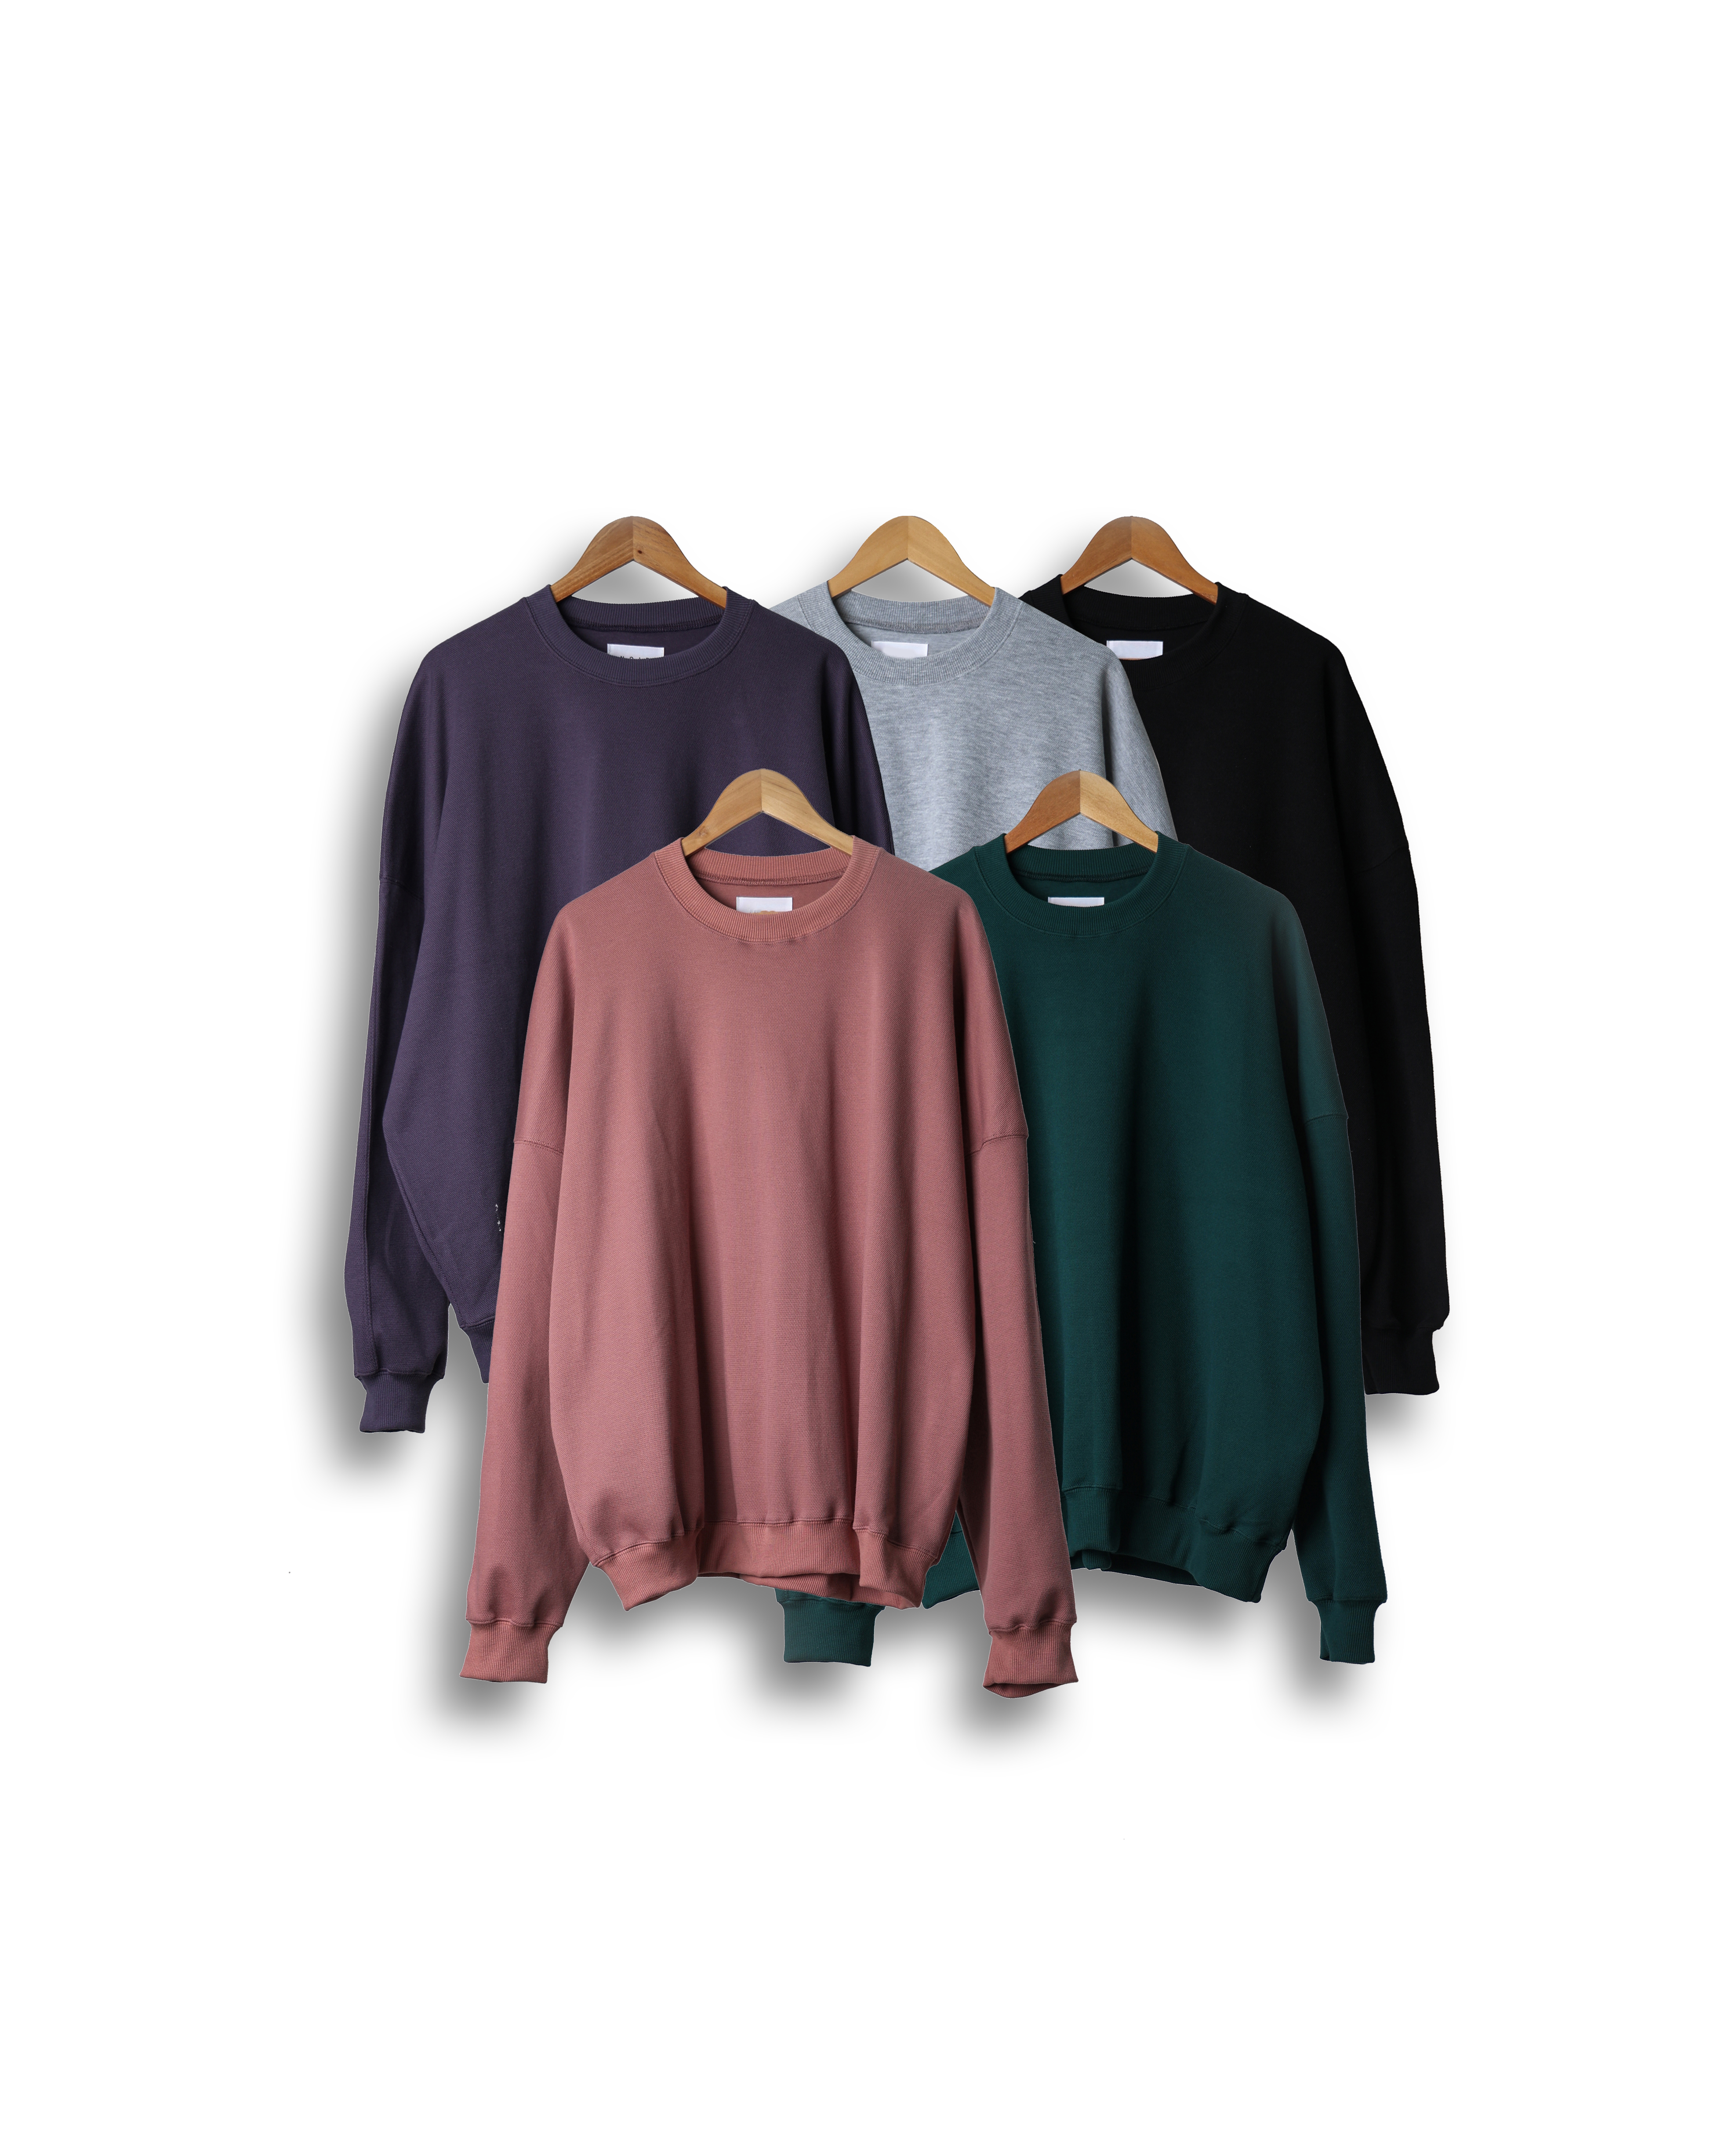 NOIR PK Oversized Basic Sweat Shirts (Black/Gray/Purple/Green/Pink)